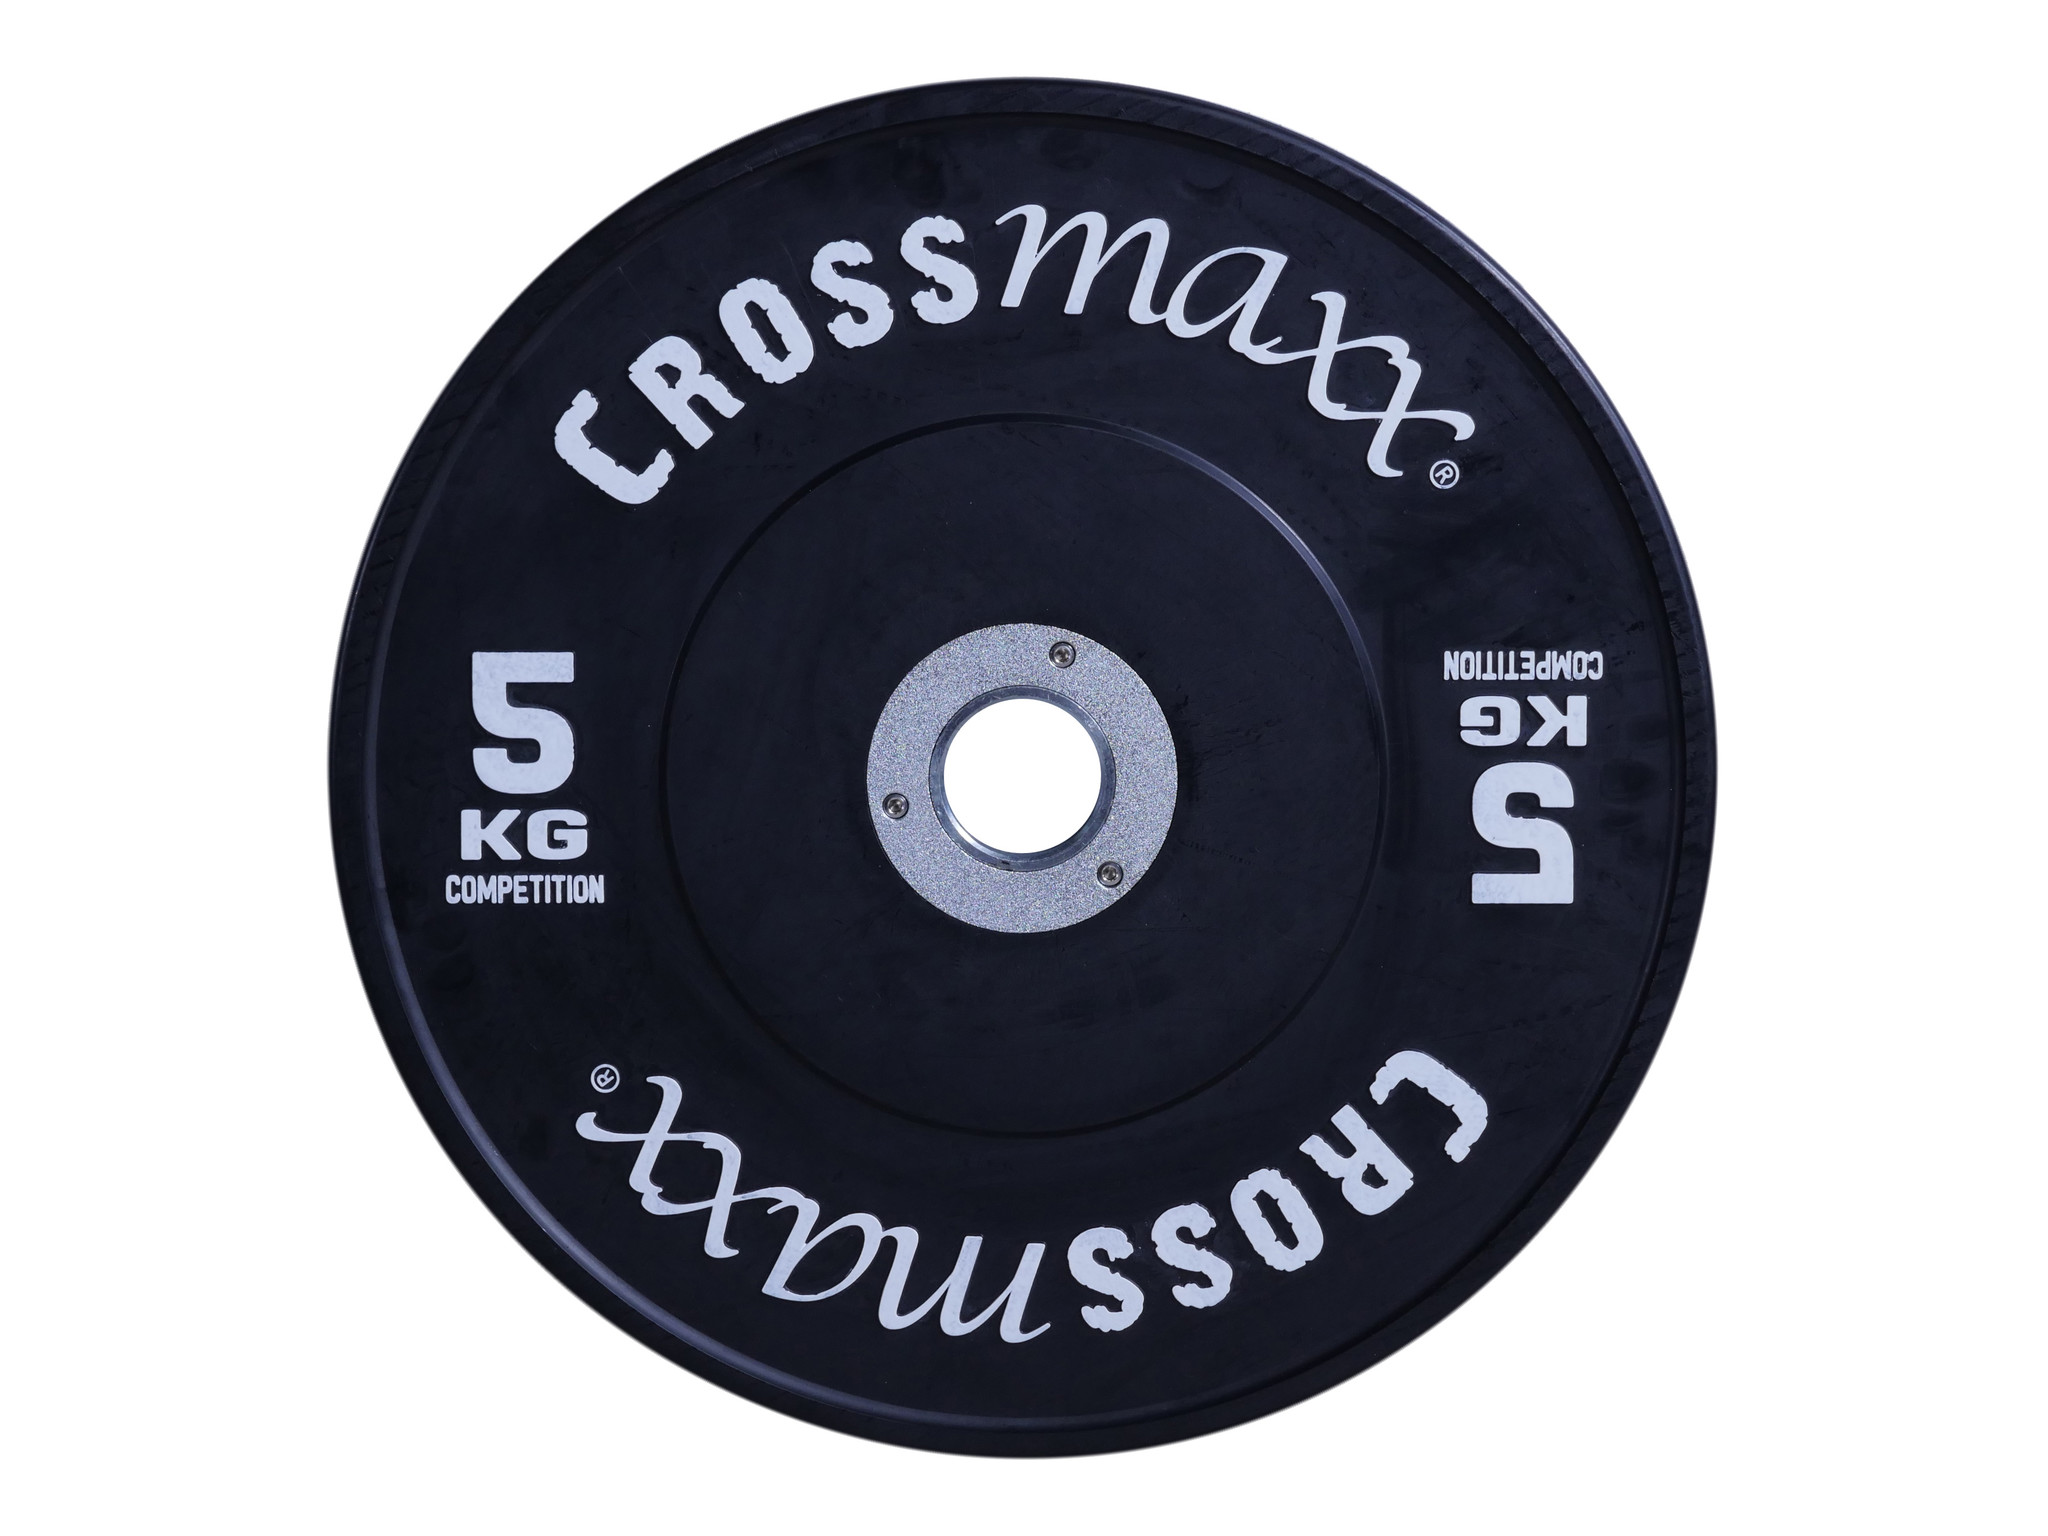 Crossmaxx Competition Bumper Plate 5 kg Black